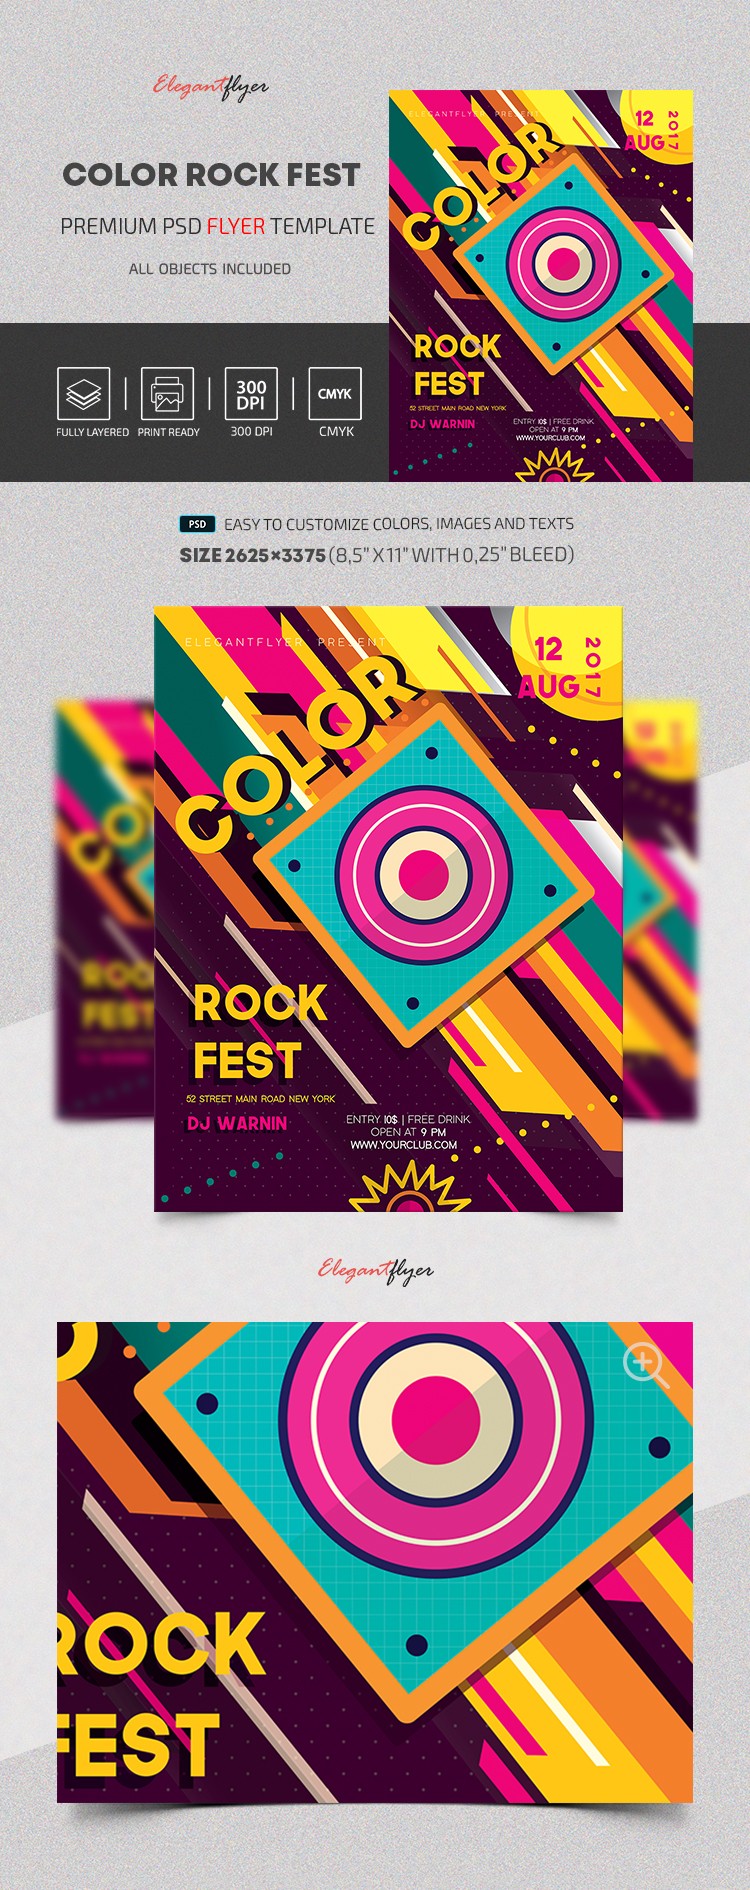 Сolor Rock Fest --> Farben Rock Fest by ElegantFlyer